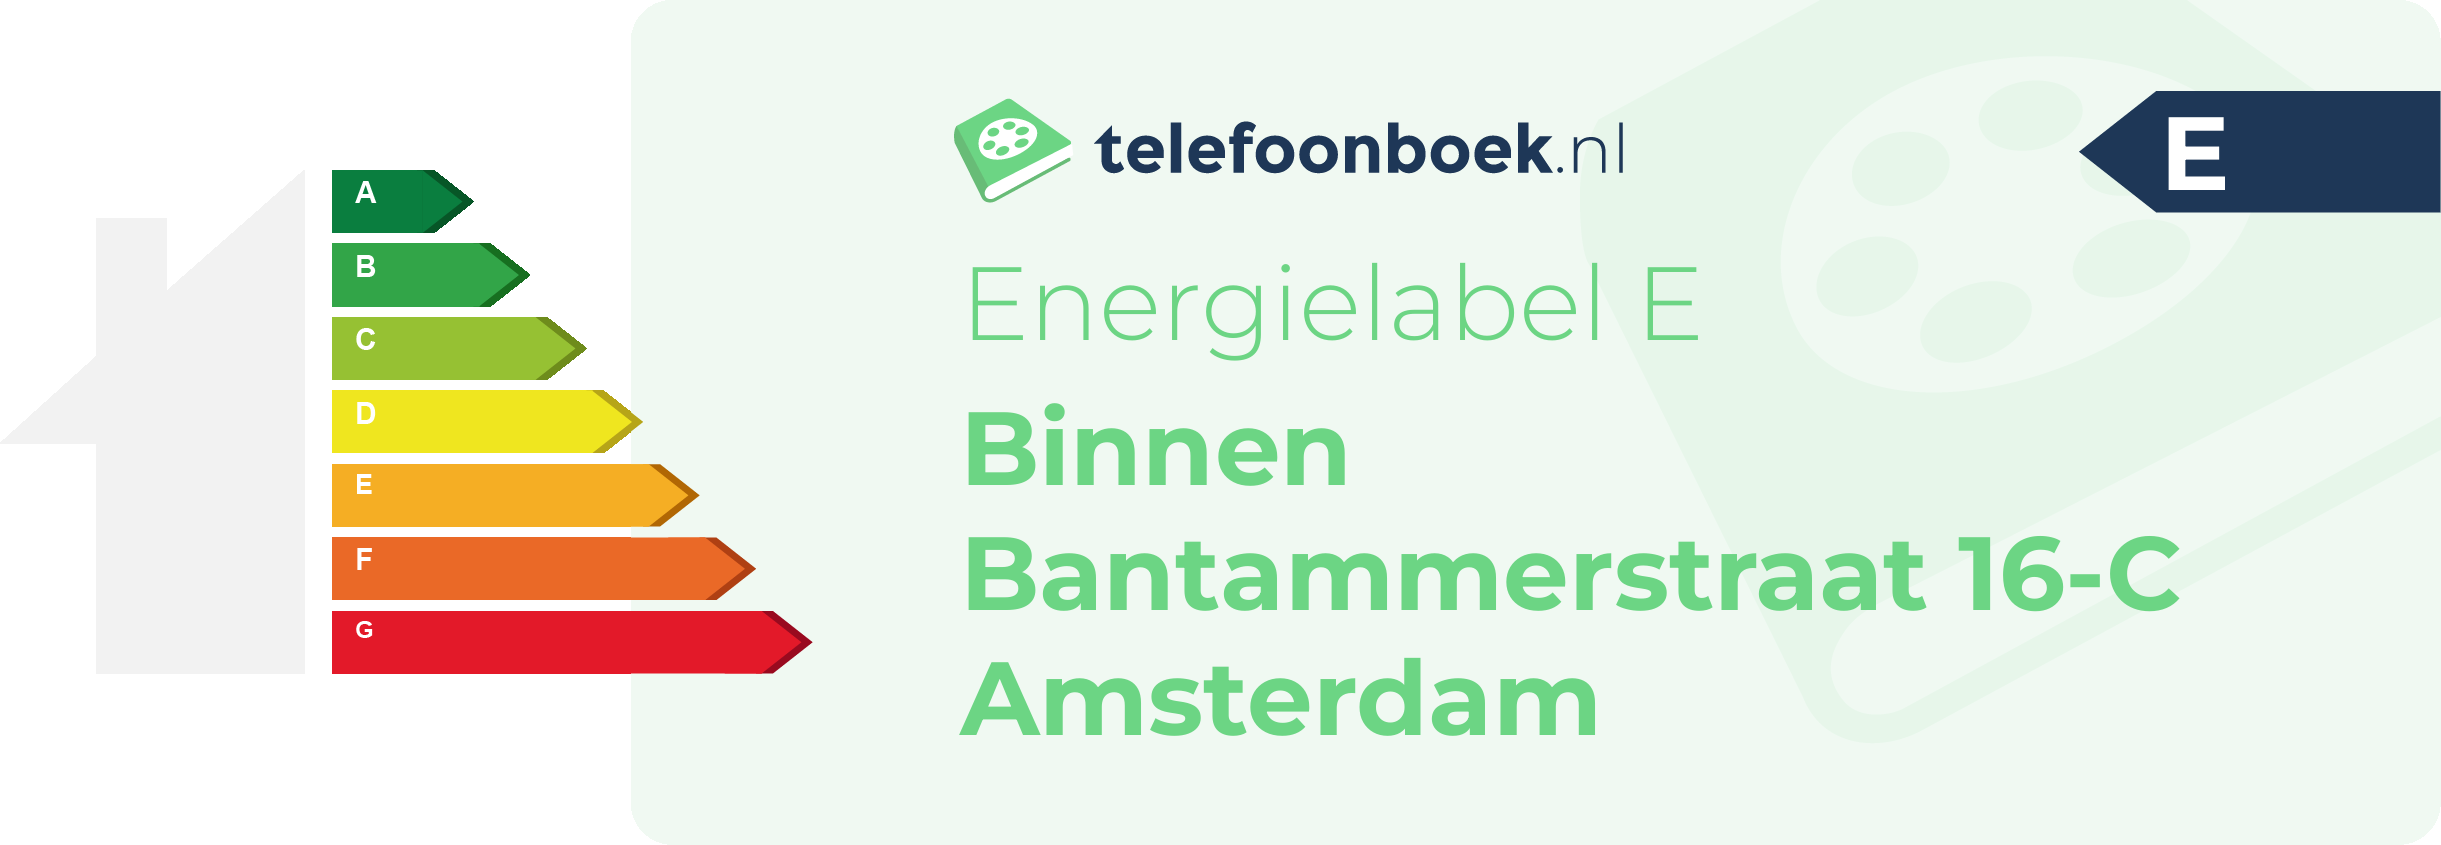 Energielabel Binnen Bantammerstraat 16-C Amsterdam